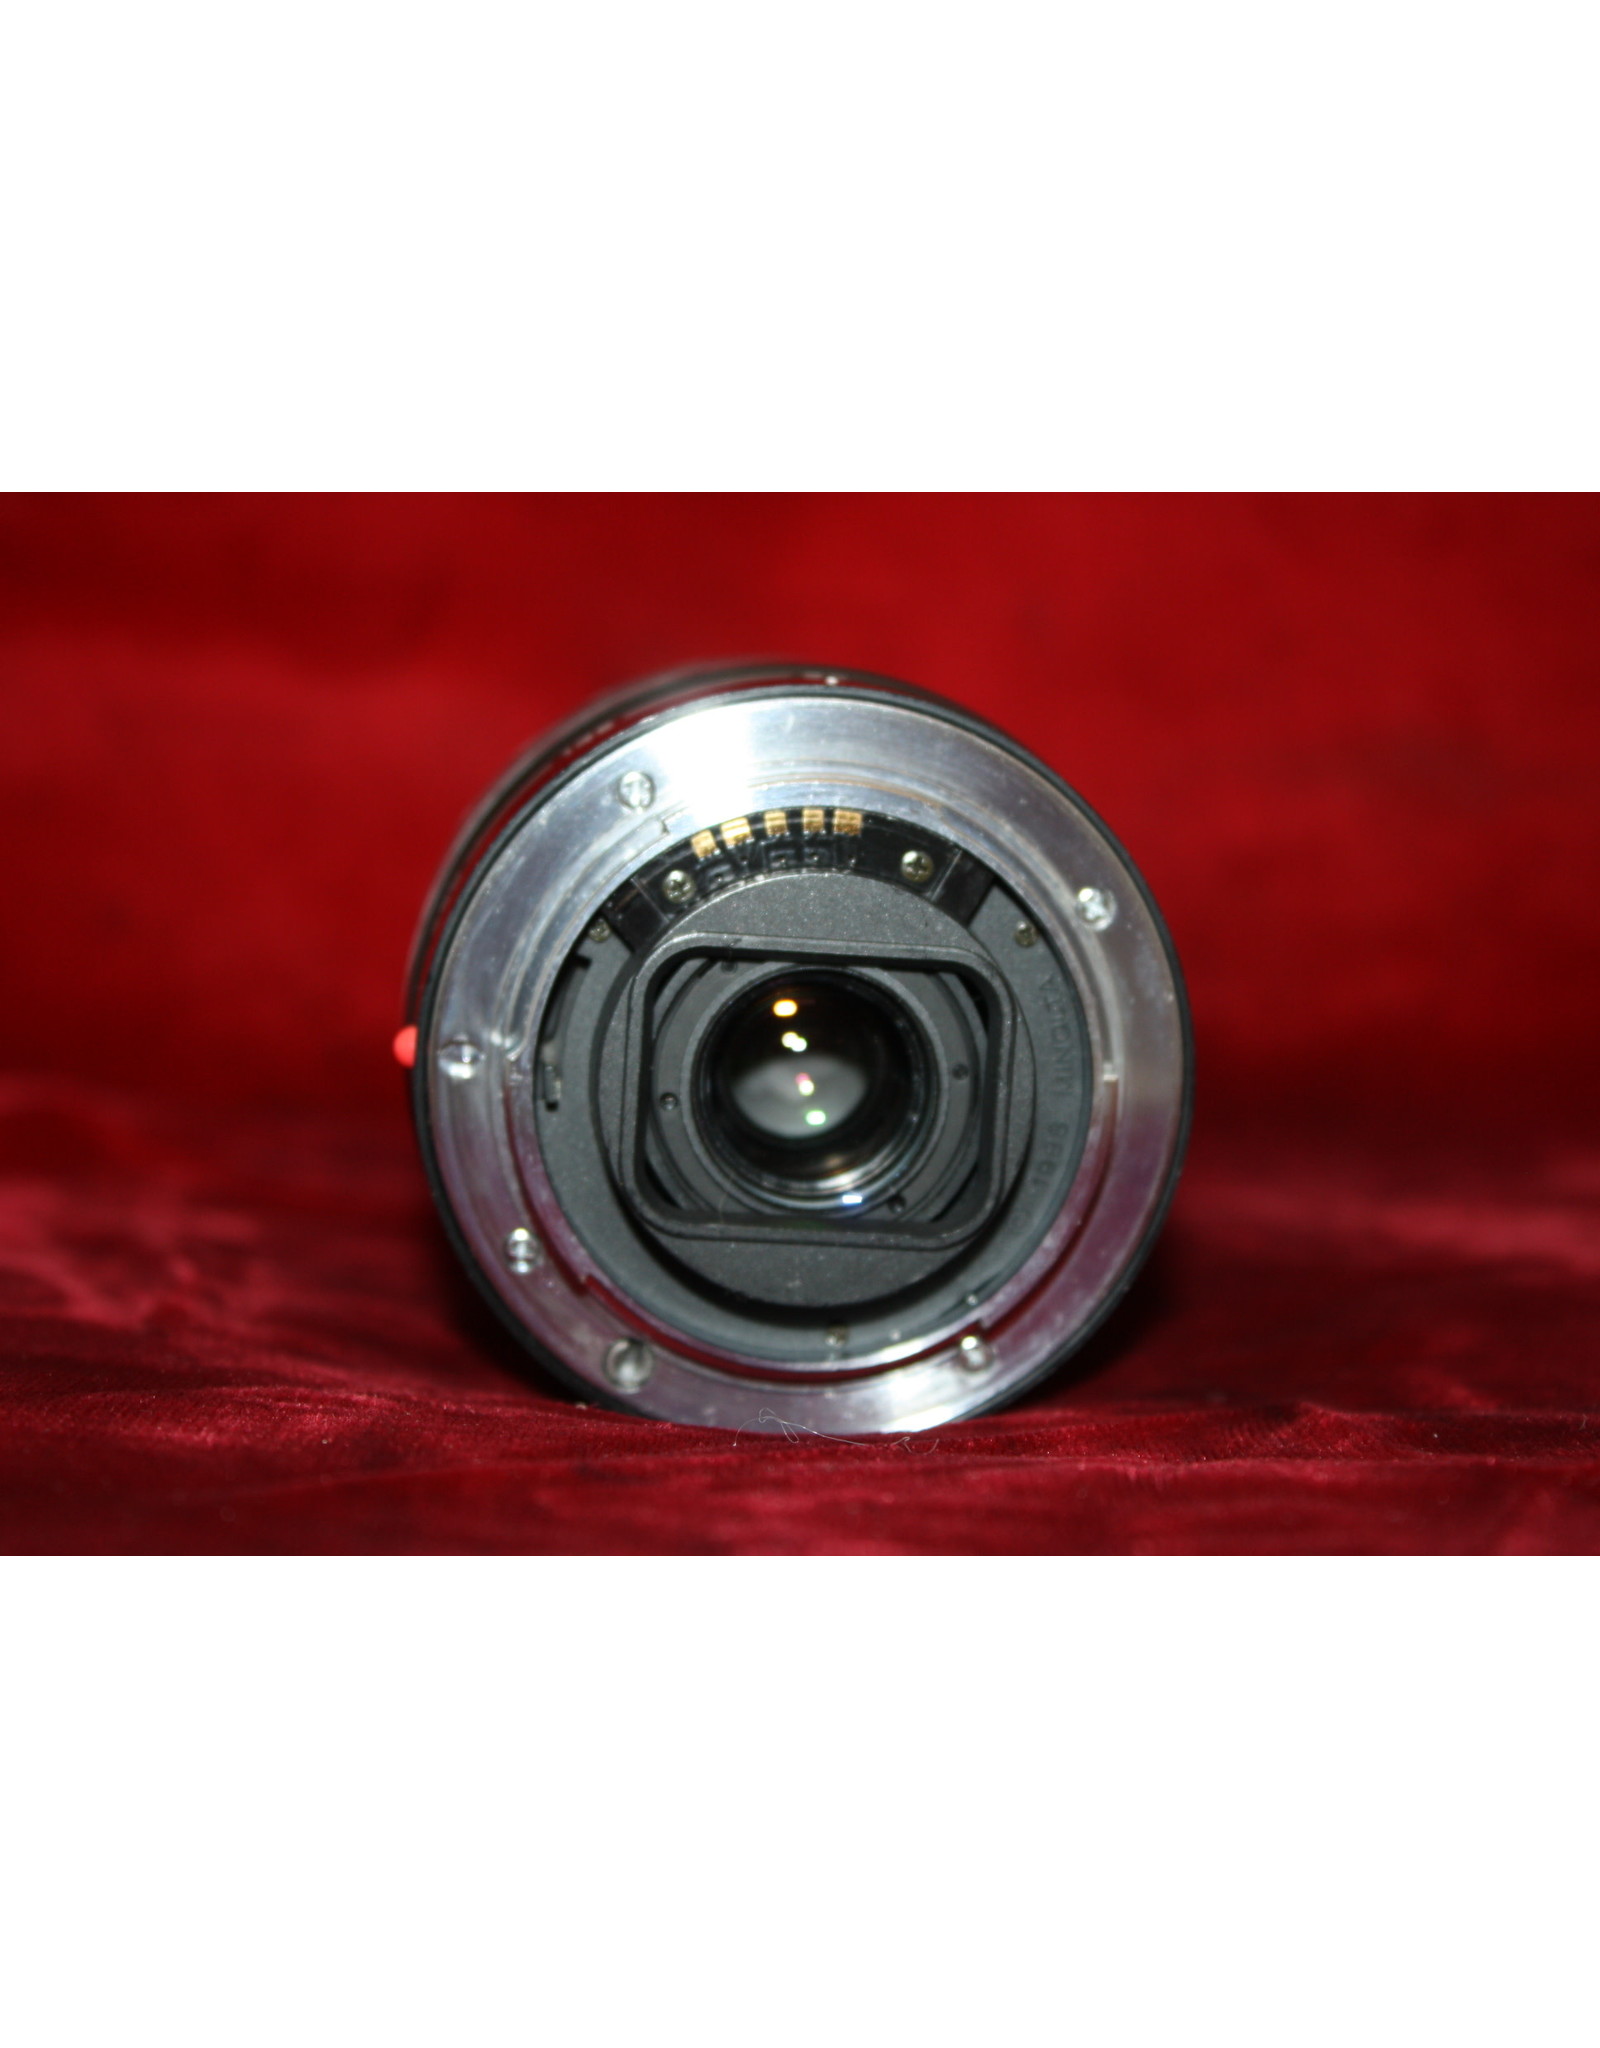 Konica Minolta Minolta Maxxum AF Zoom 80-200mm f/4.6-5.6 Lens for Maxxum/ Sony A Mount (Pre-Owned)